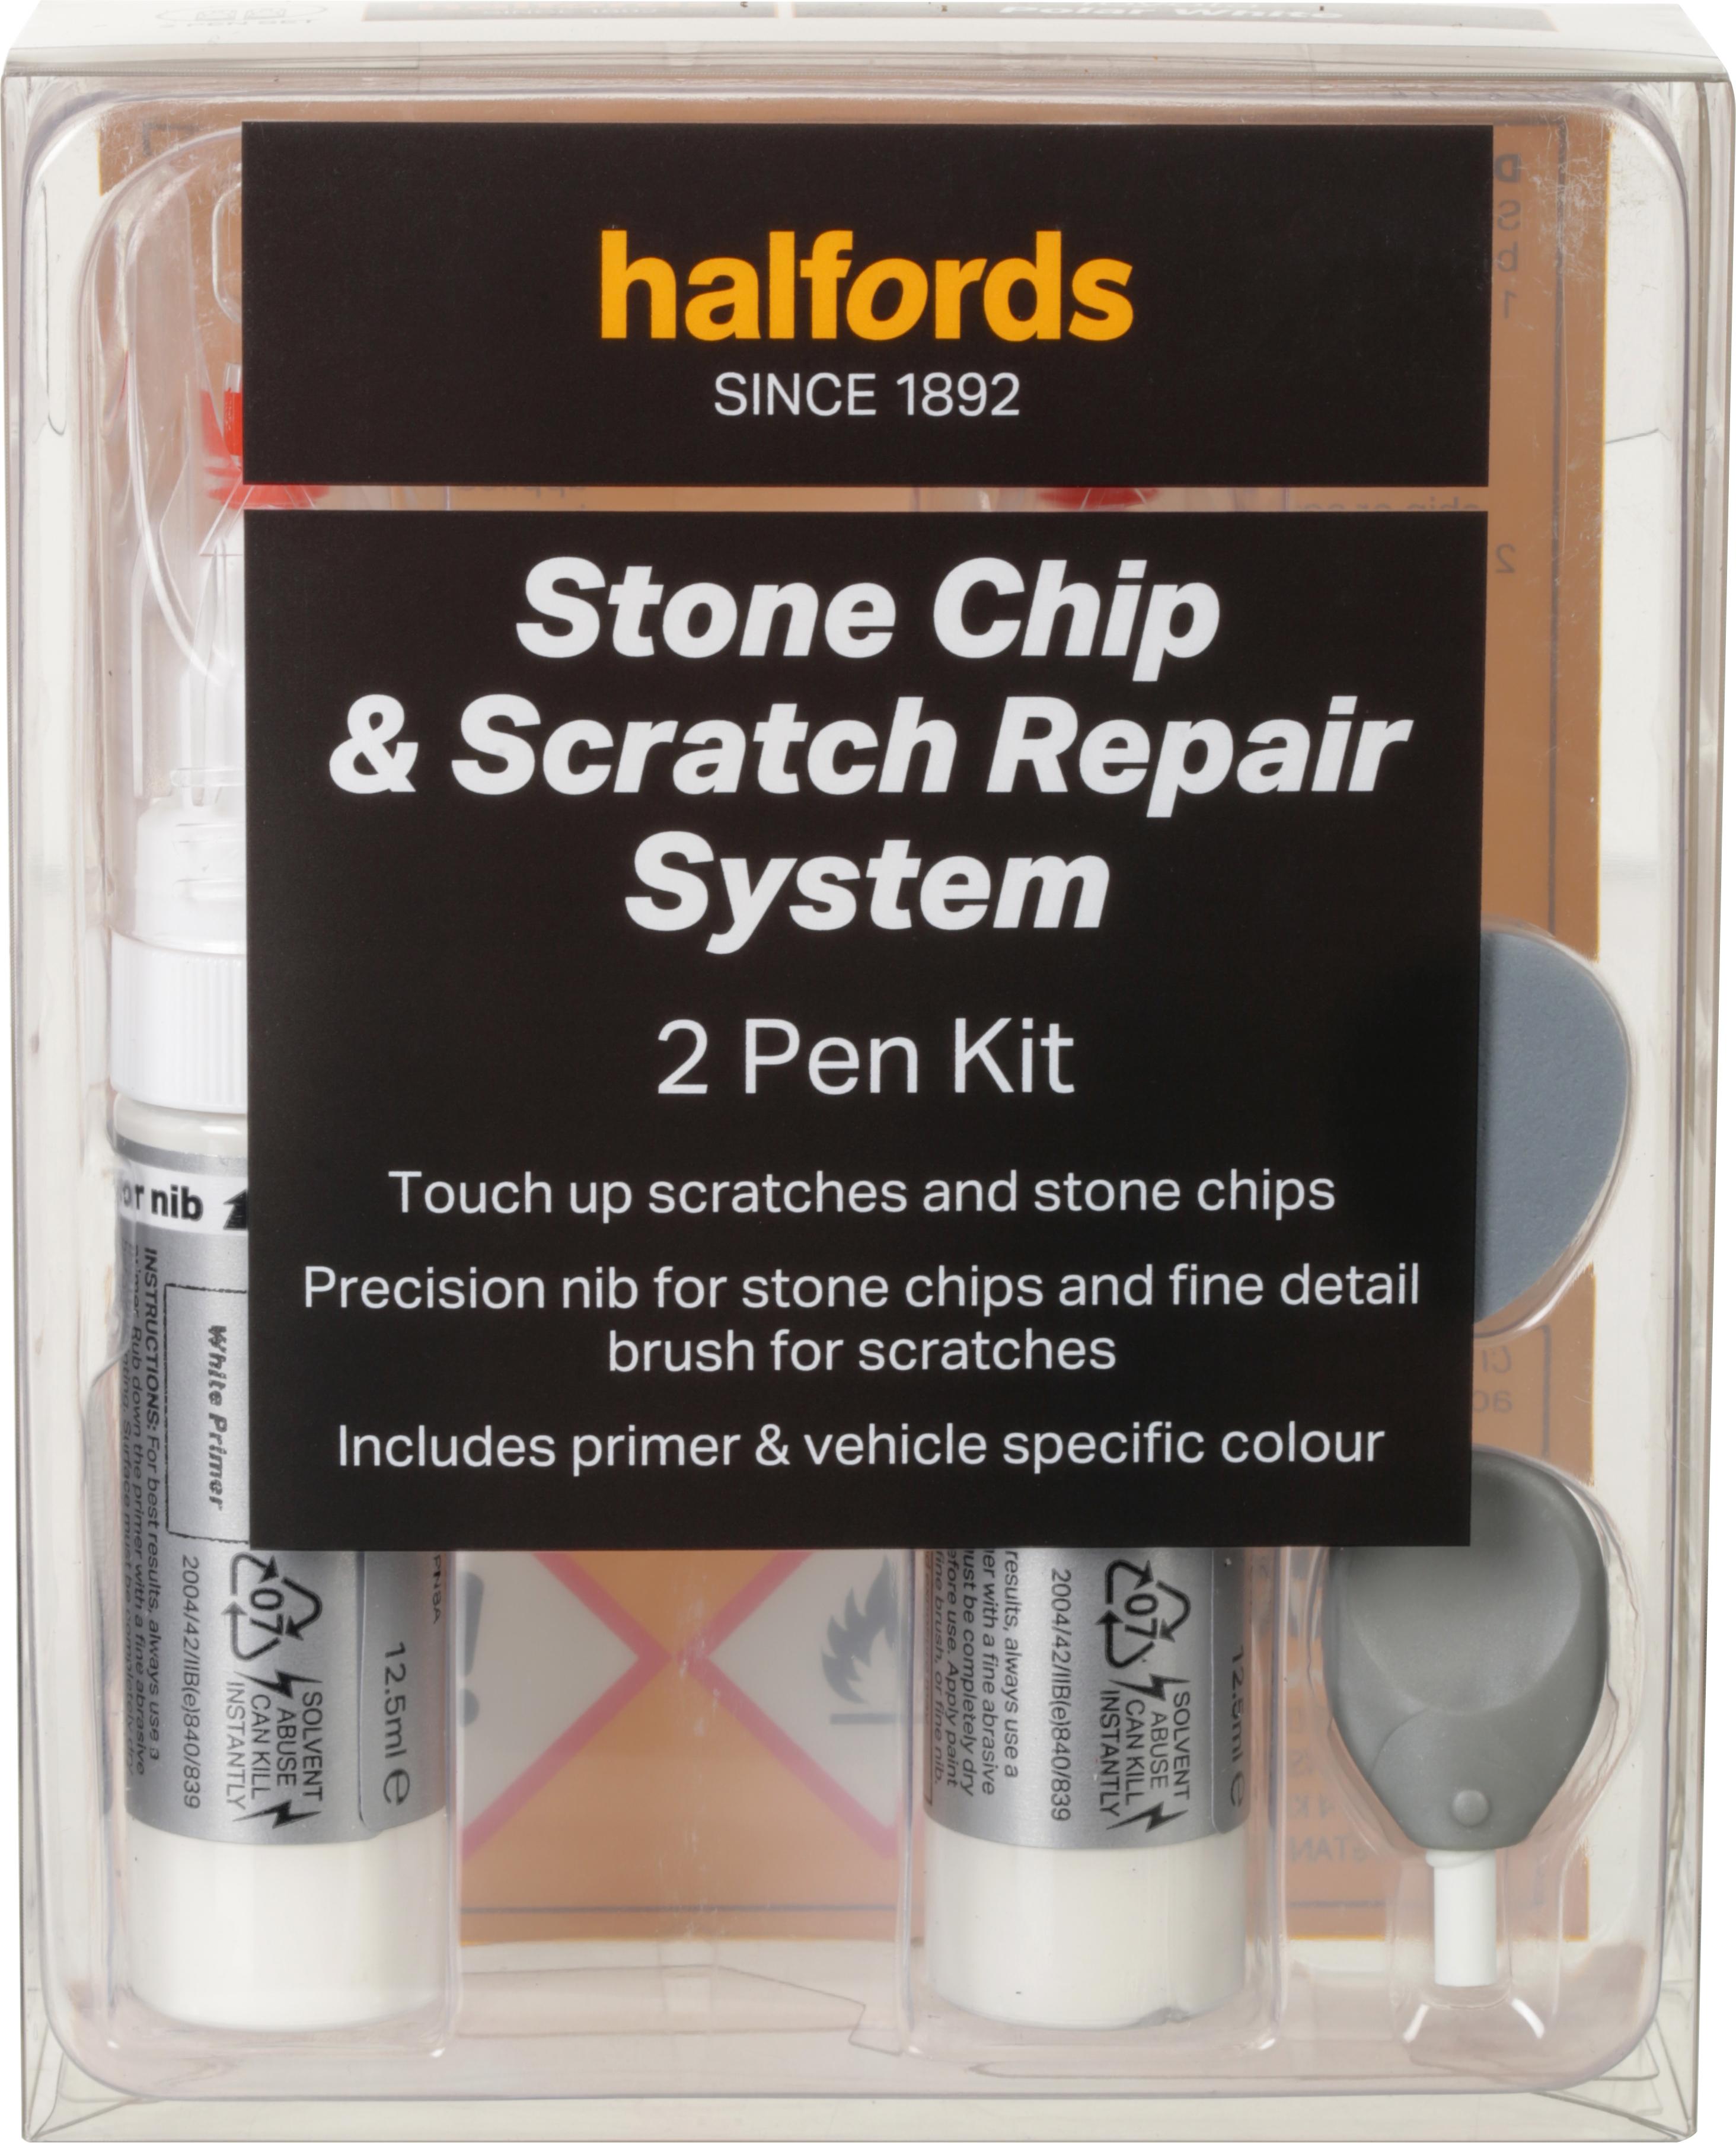 Halfords Toyota Polar White Scratch & Chip Repair Kit